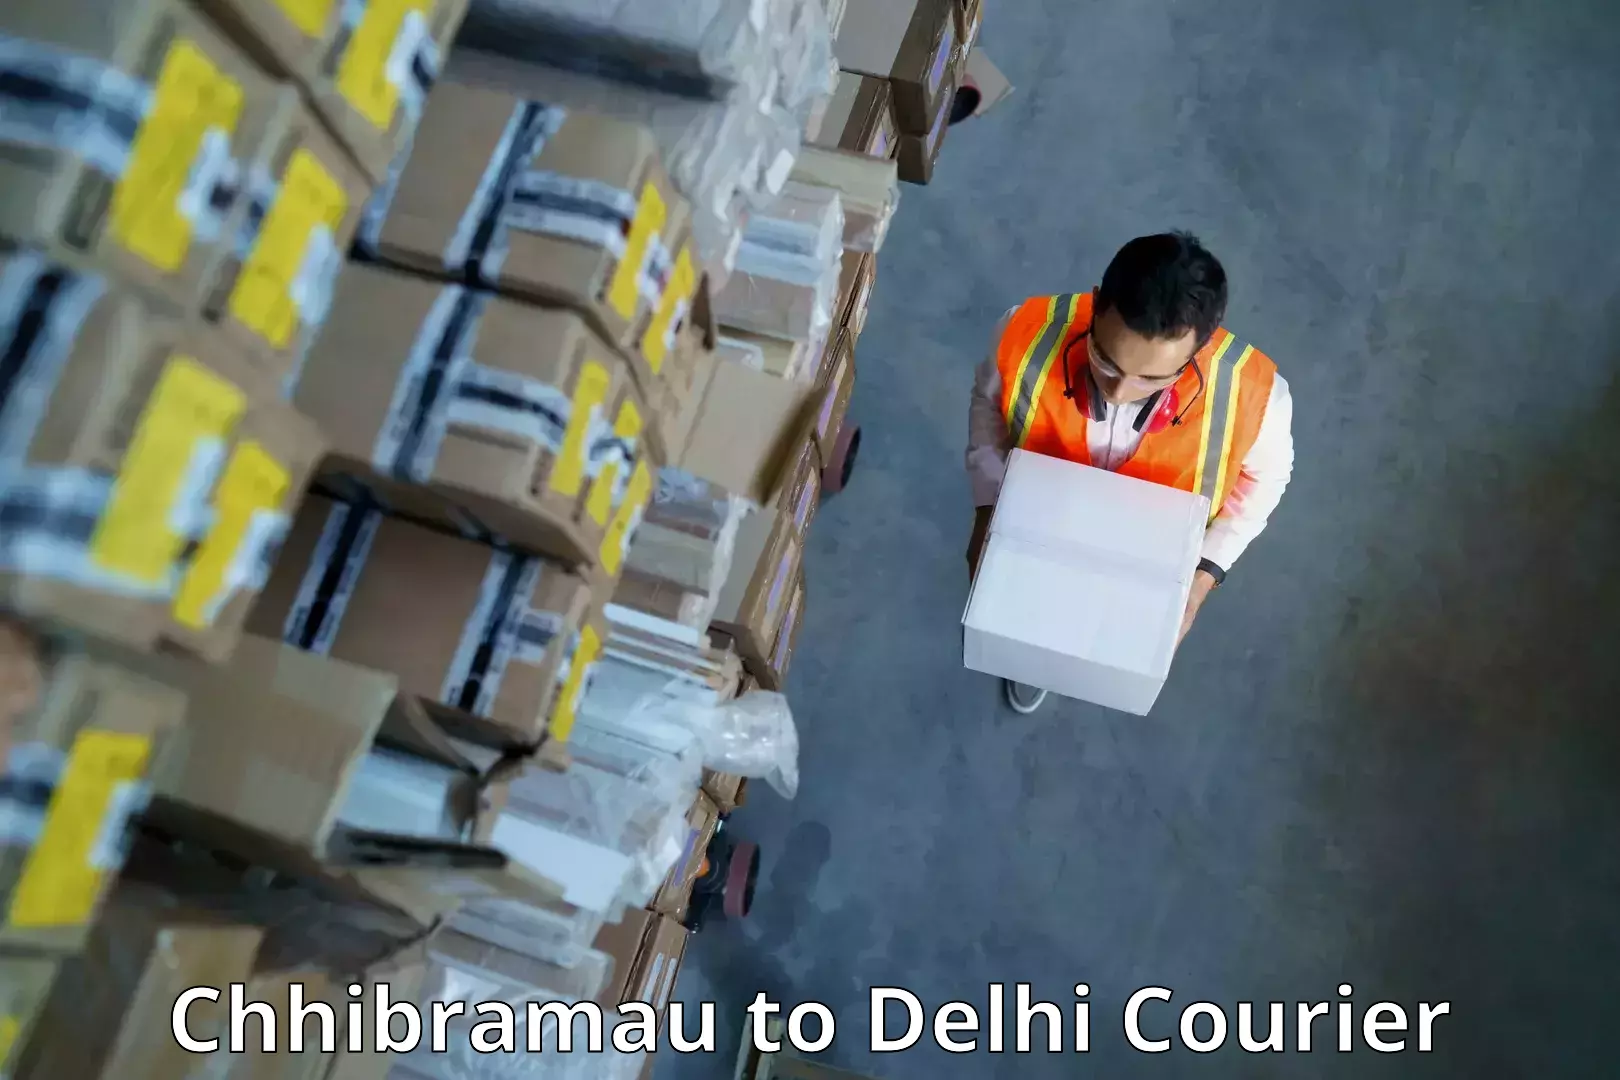 On-call courier service Chhibramau to East Delhi